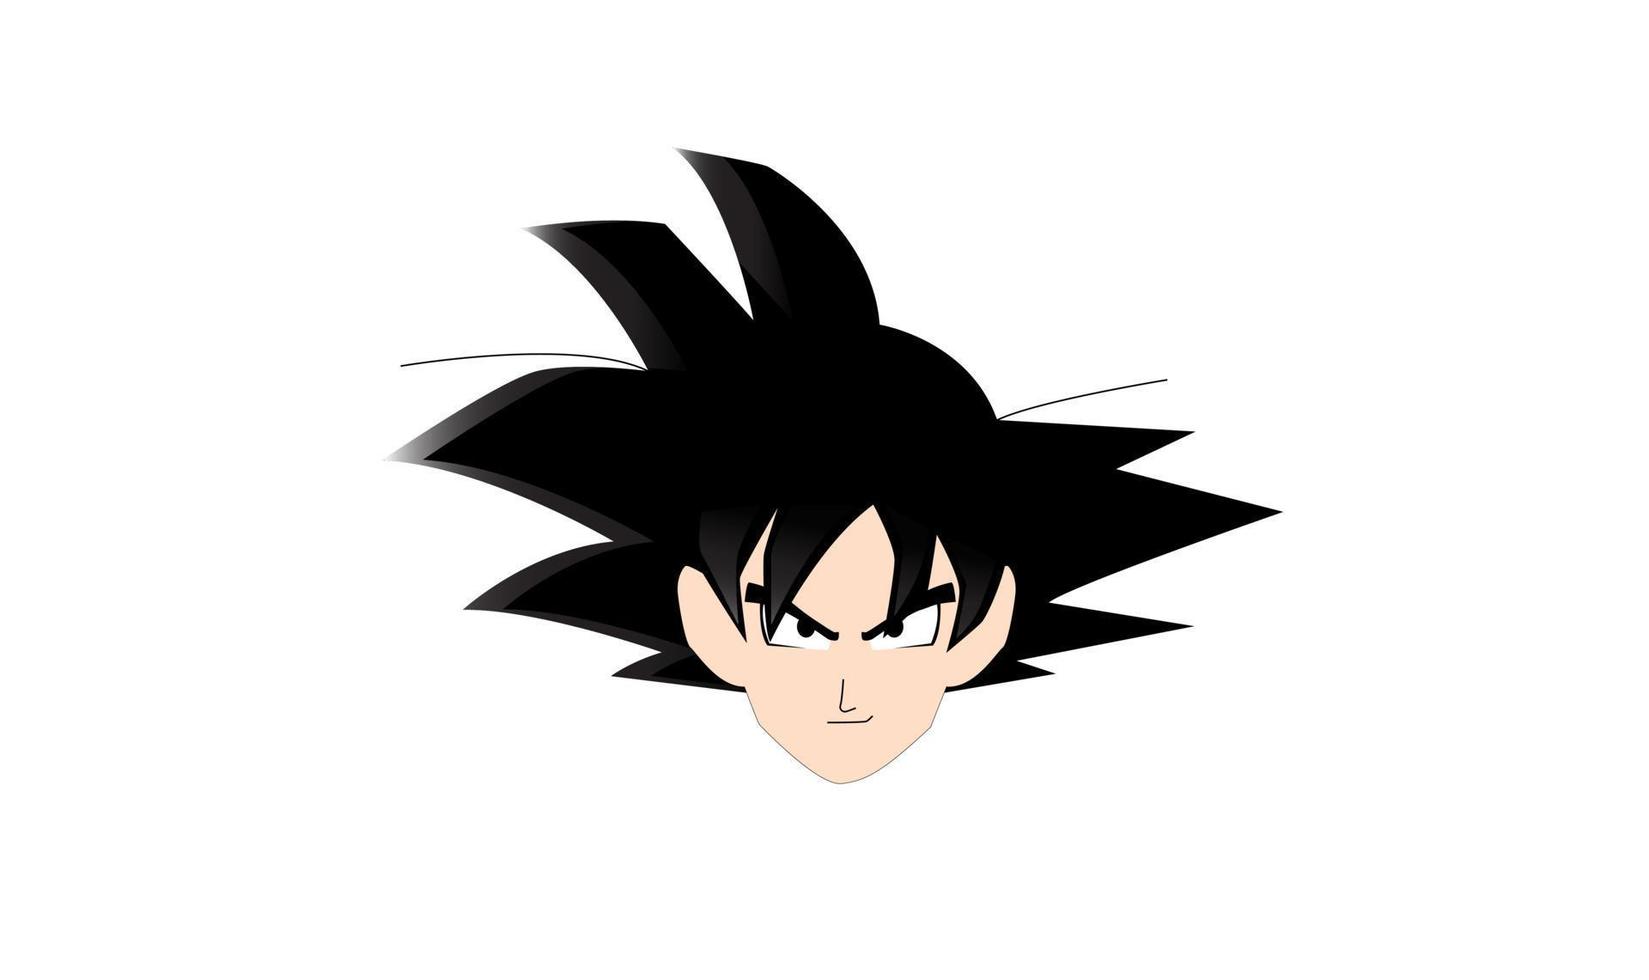 Illustrationsvektorgrafik des Goku-Gesichtscharakters in Dragon Ball Anime vektor